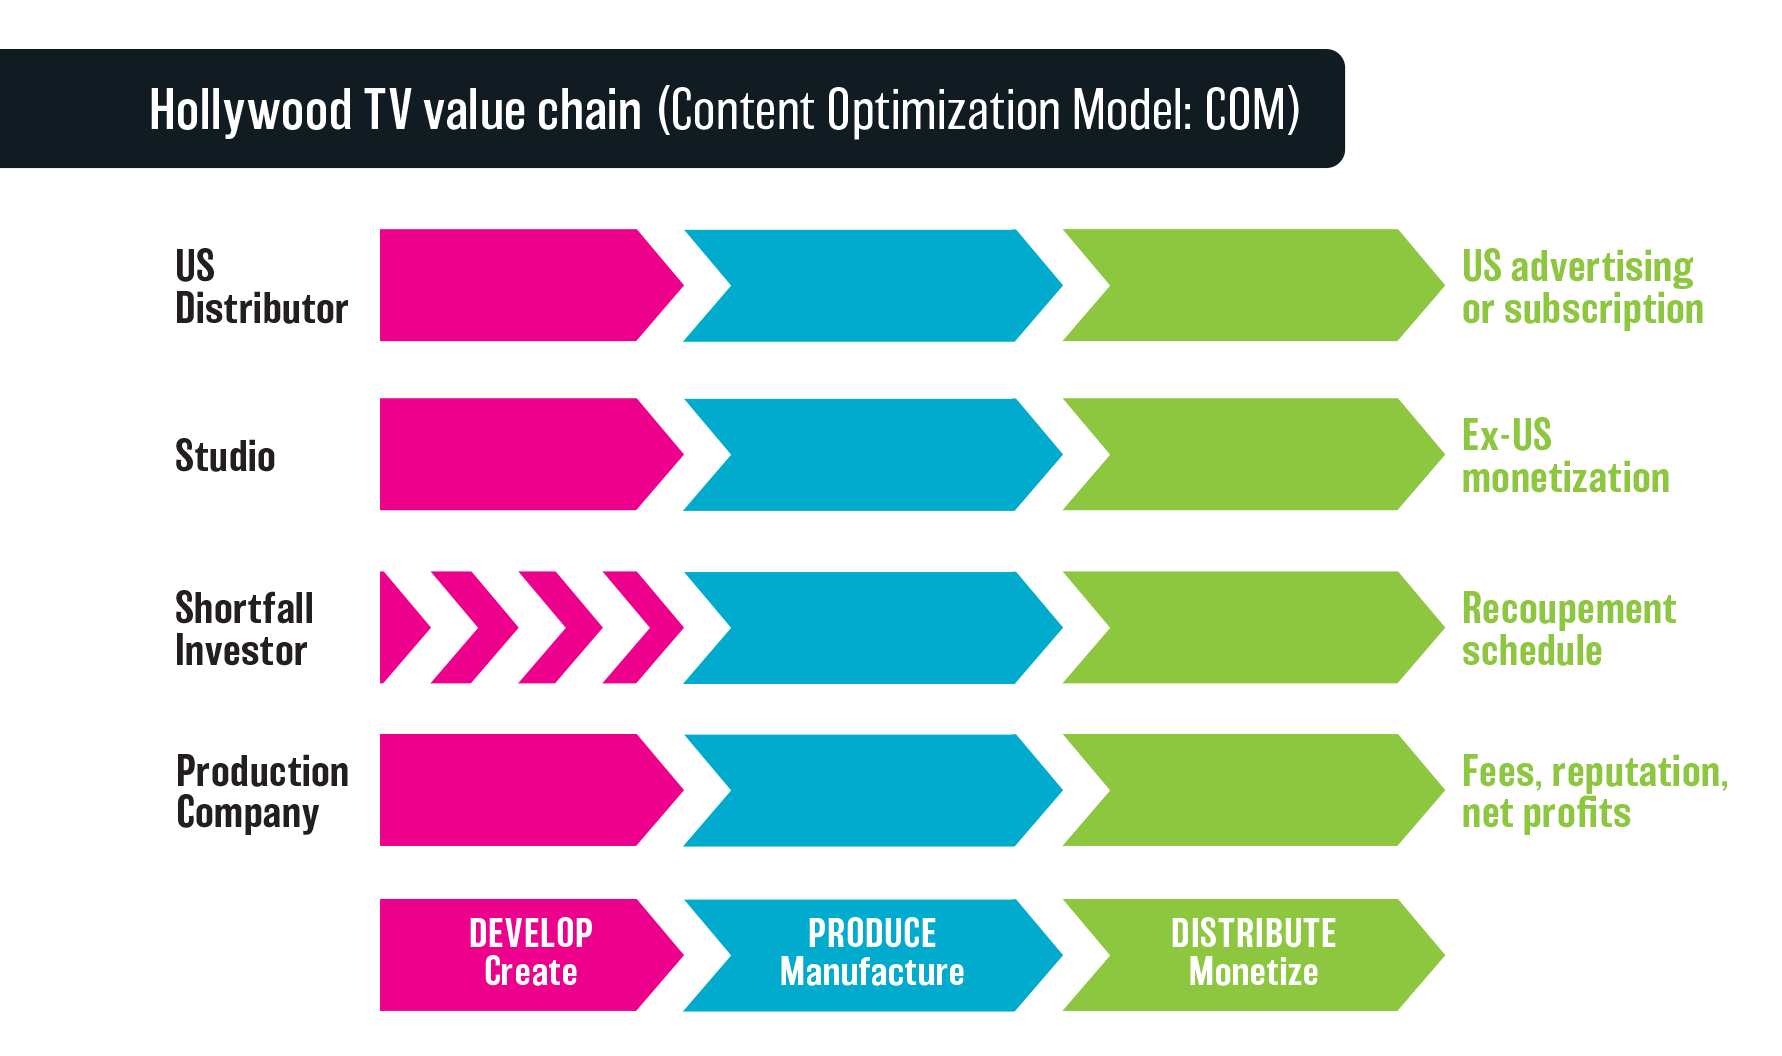 Figure 3.2: Hollywood TV value chain (Content Optimization Model: COM)